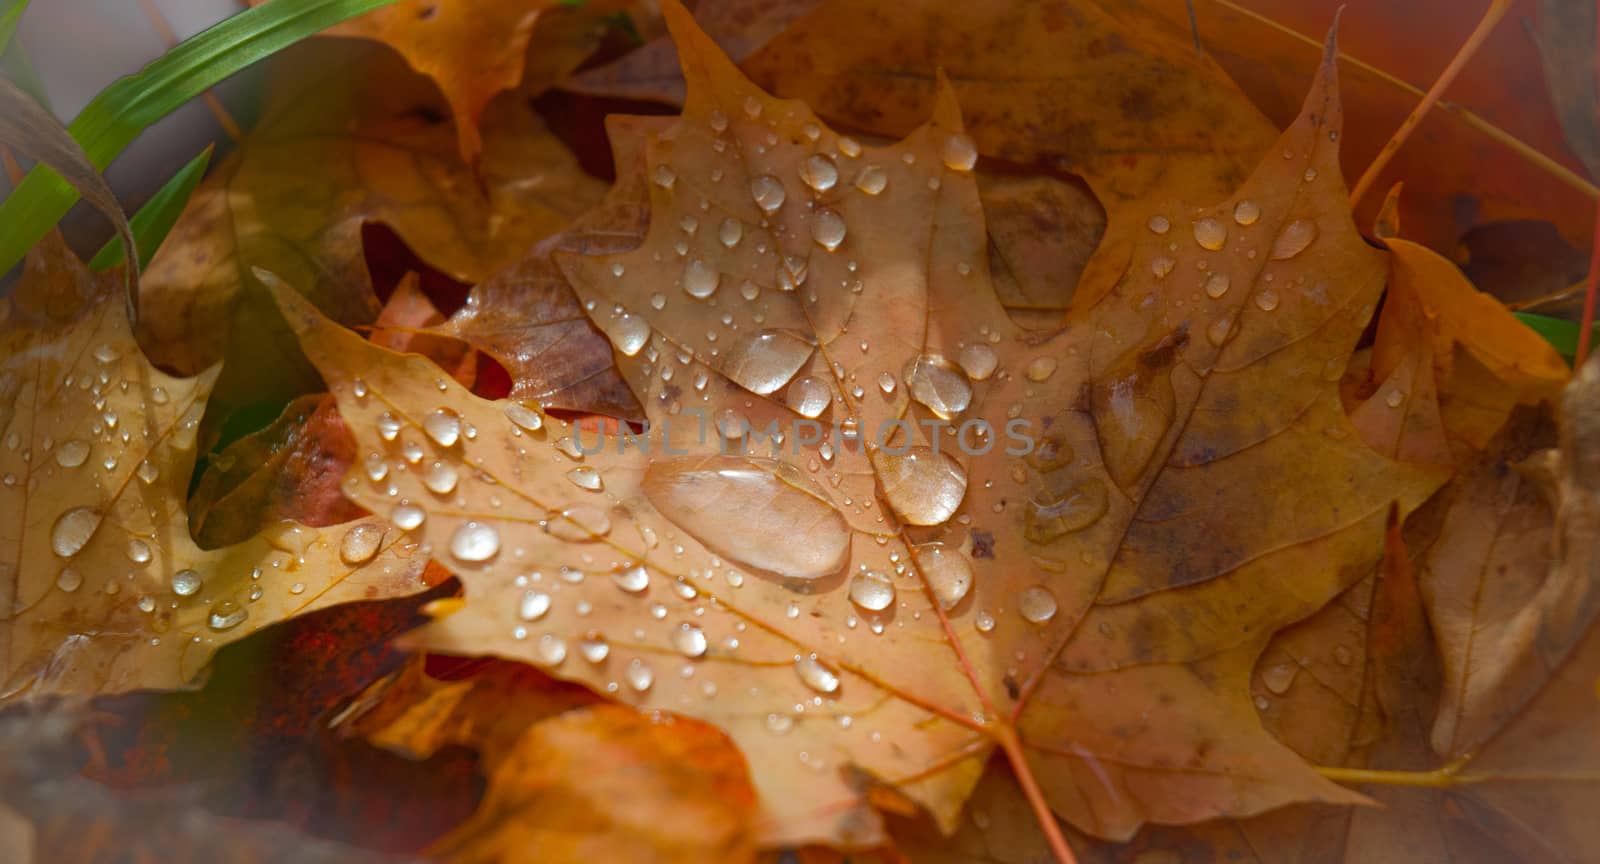 Drops of rain water on fallen autumn maple leaves. by valleyboi63